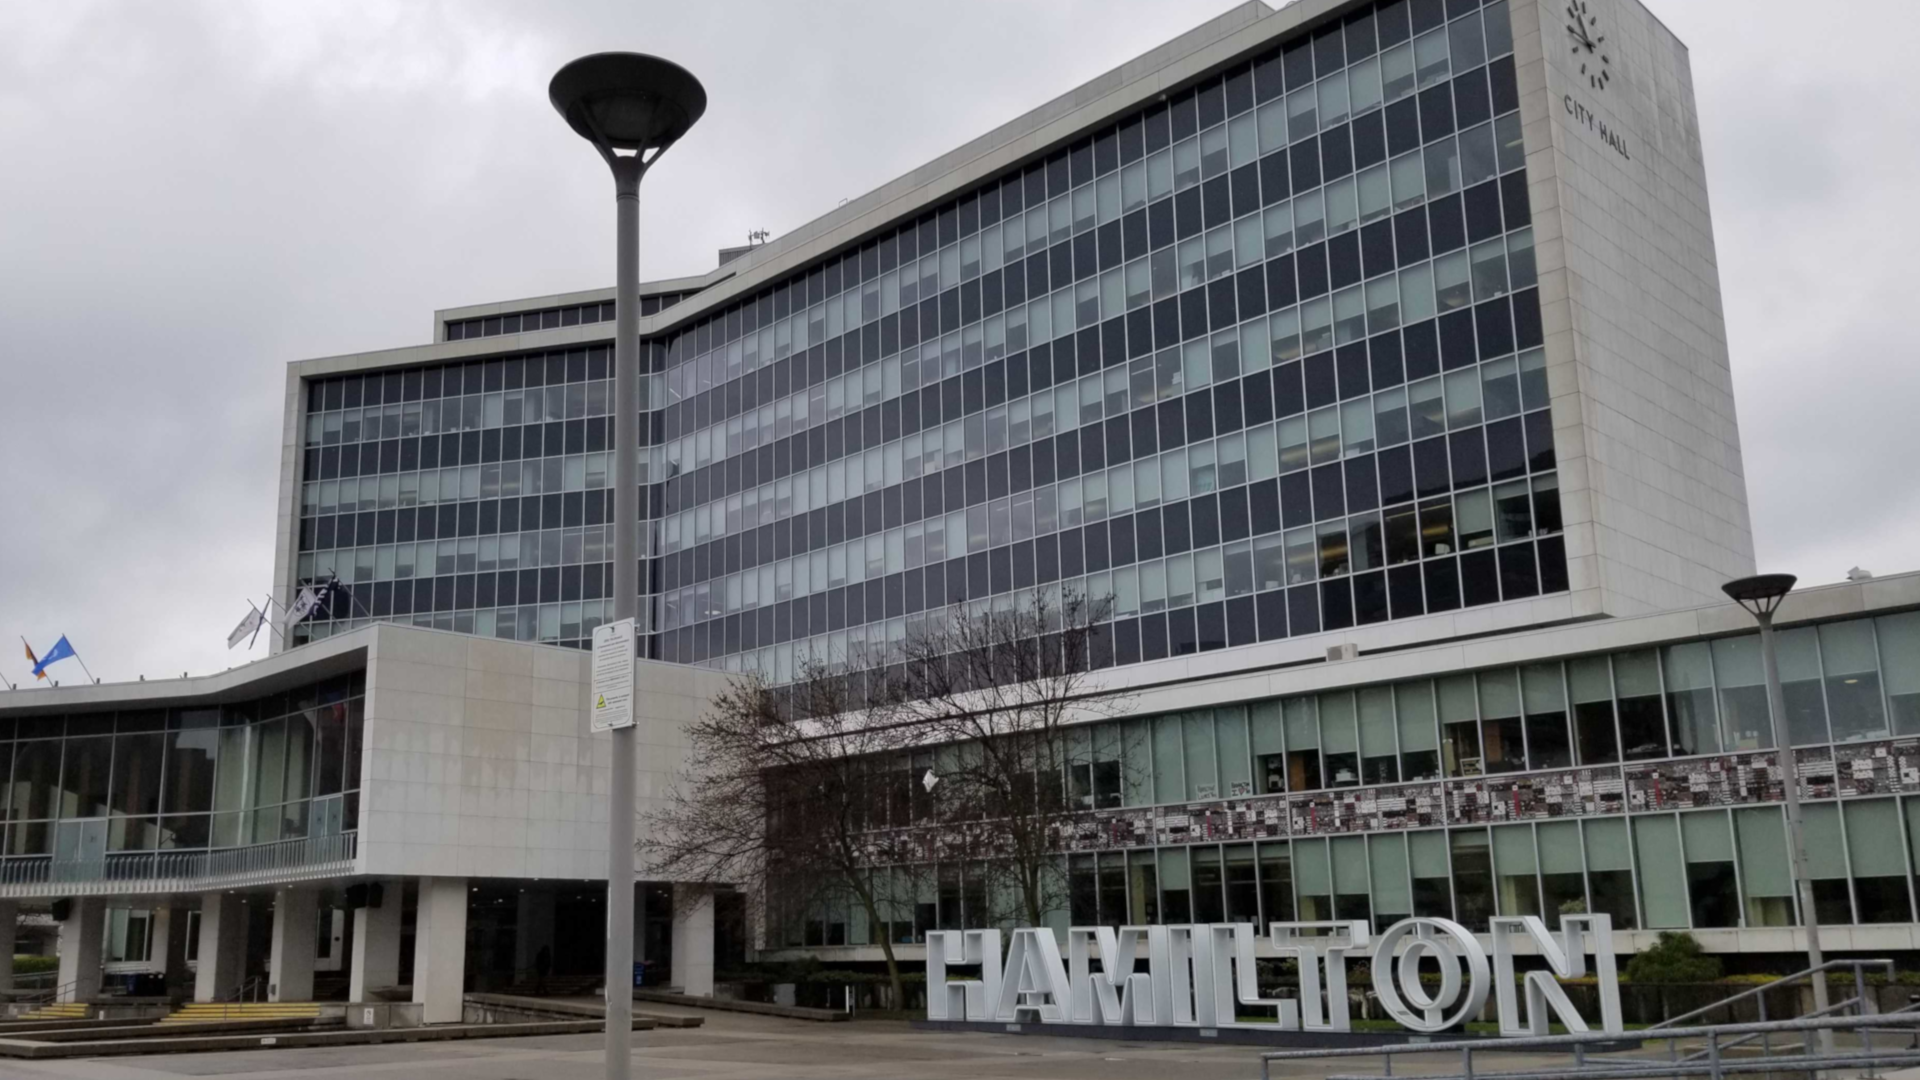 Hamilton alerts city hall drop box users of recent vandalism, theft